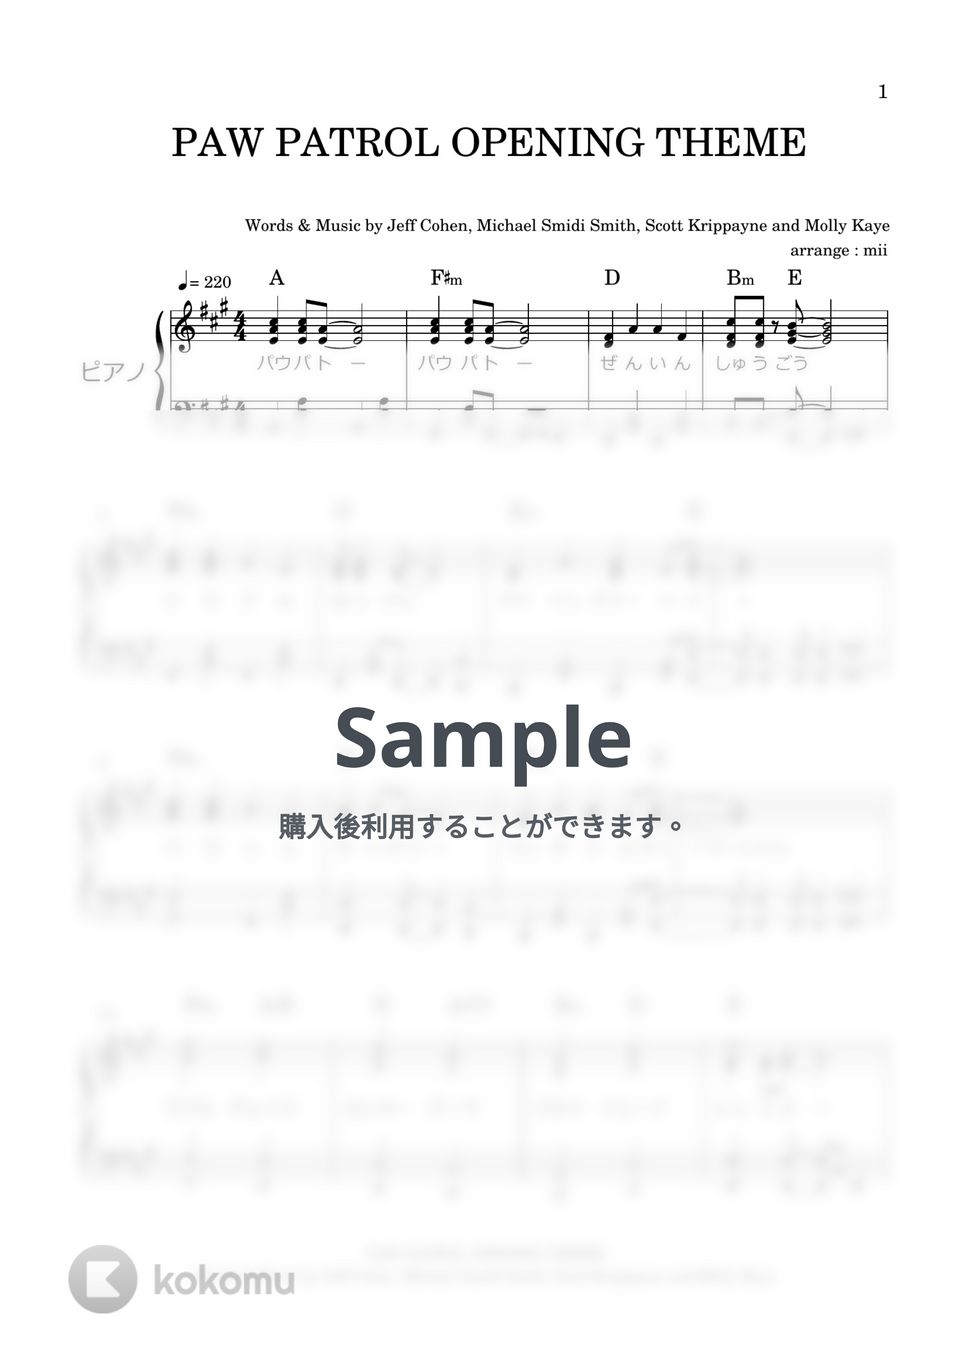 CHAPPLE JAMES - パウ・パトロール (オープニングテーマ) by miiの楽譜棚